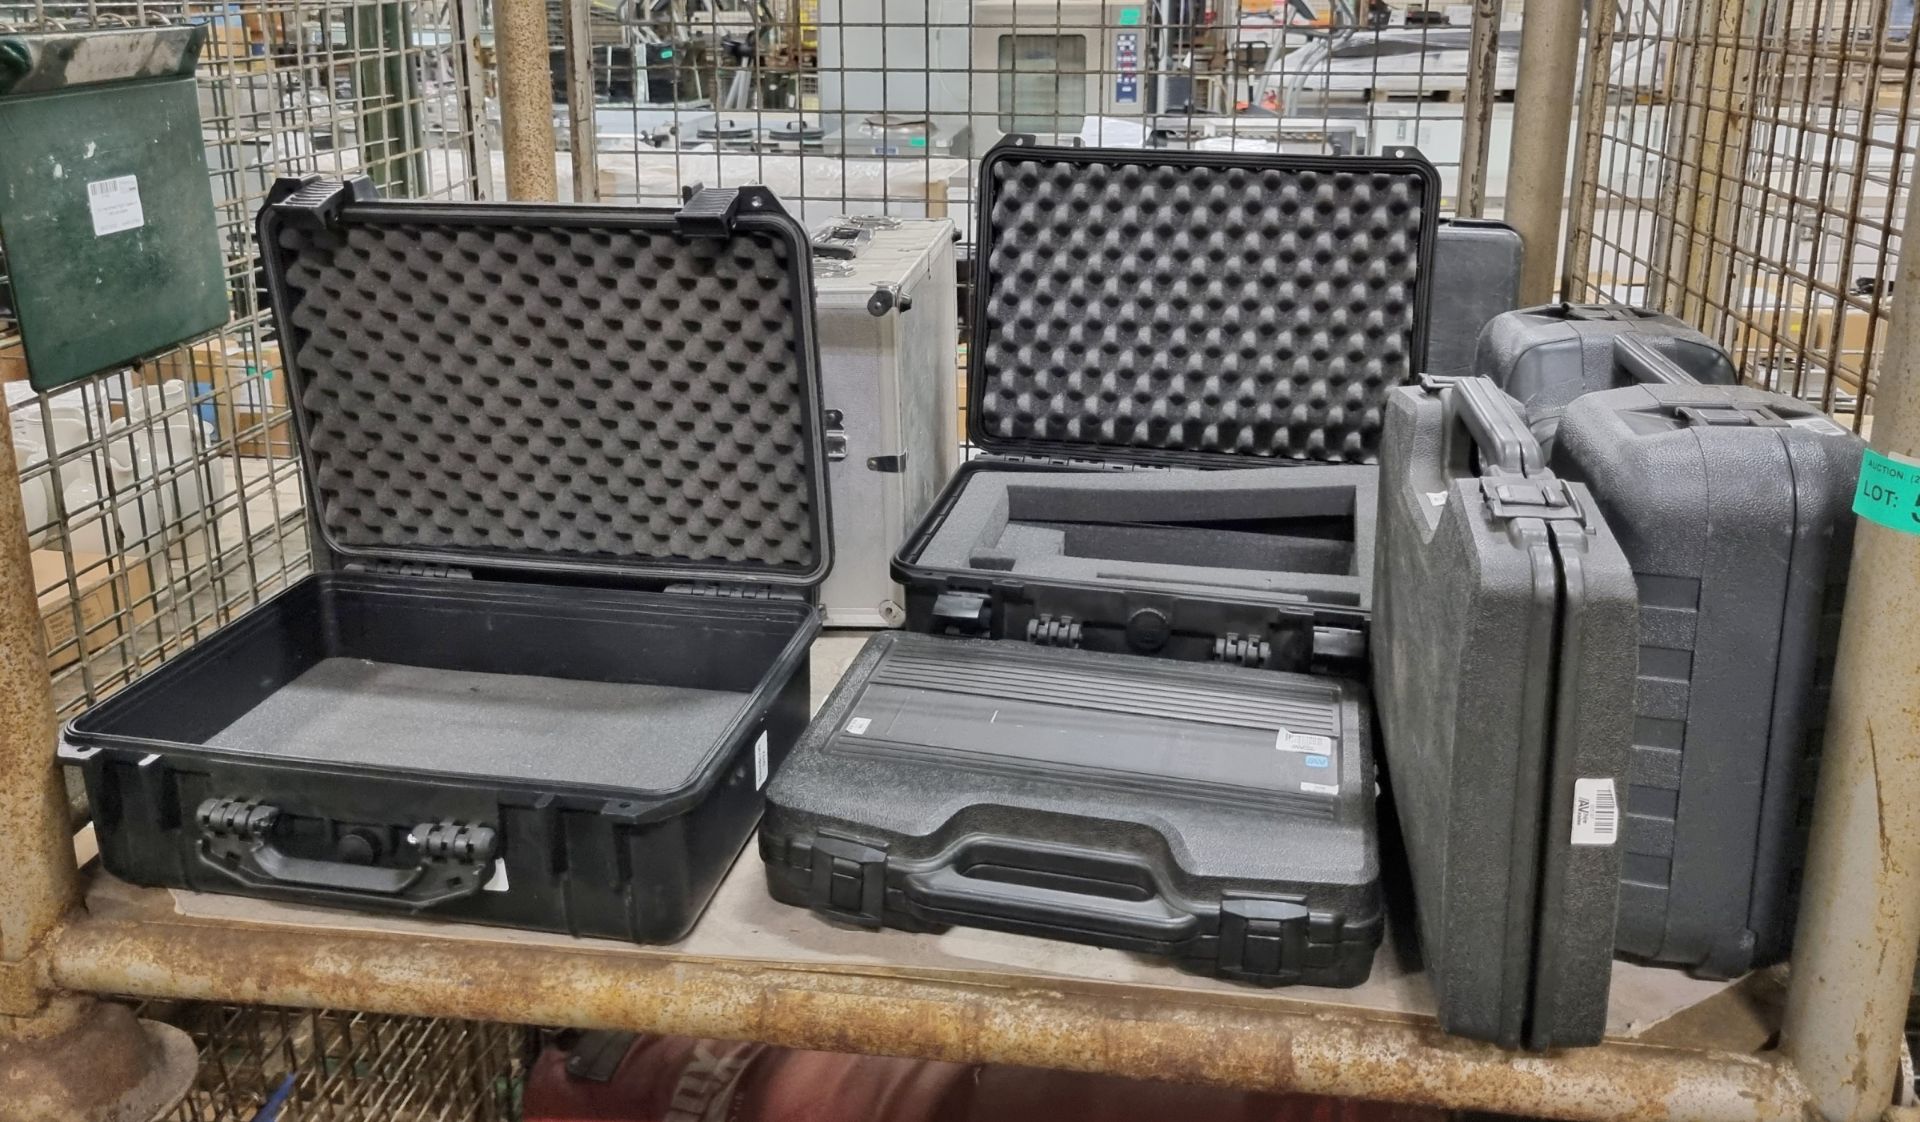 11x Handheld flight cases in various sizes